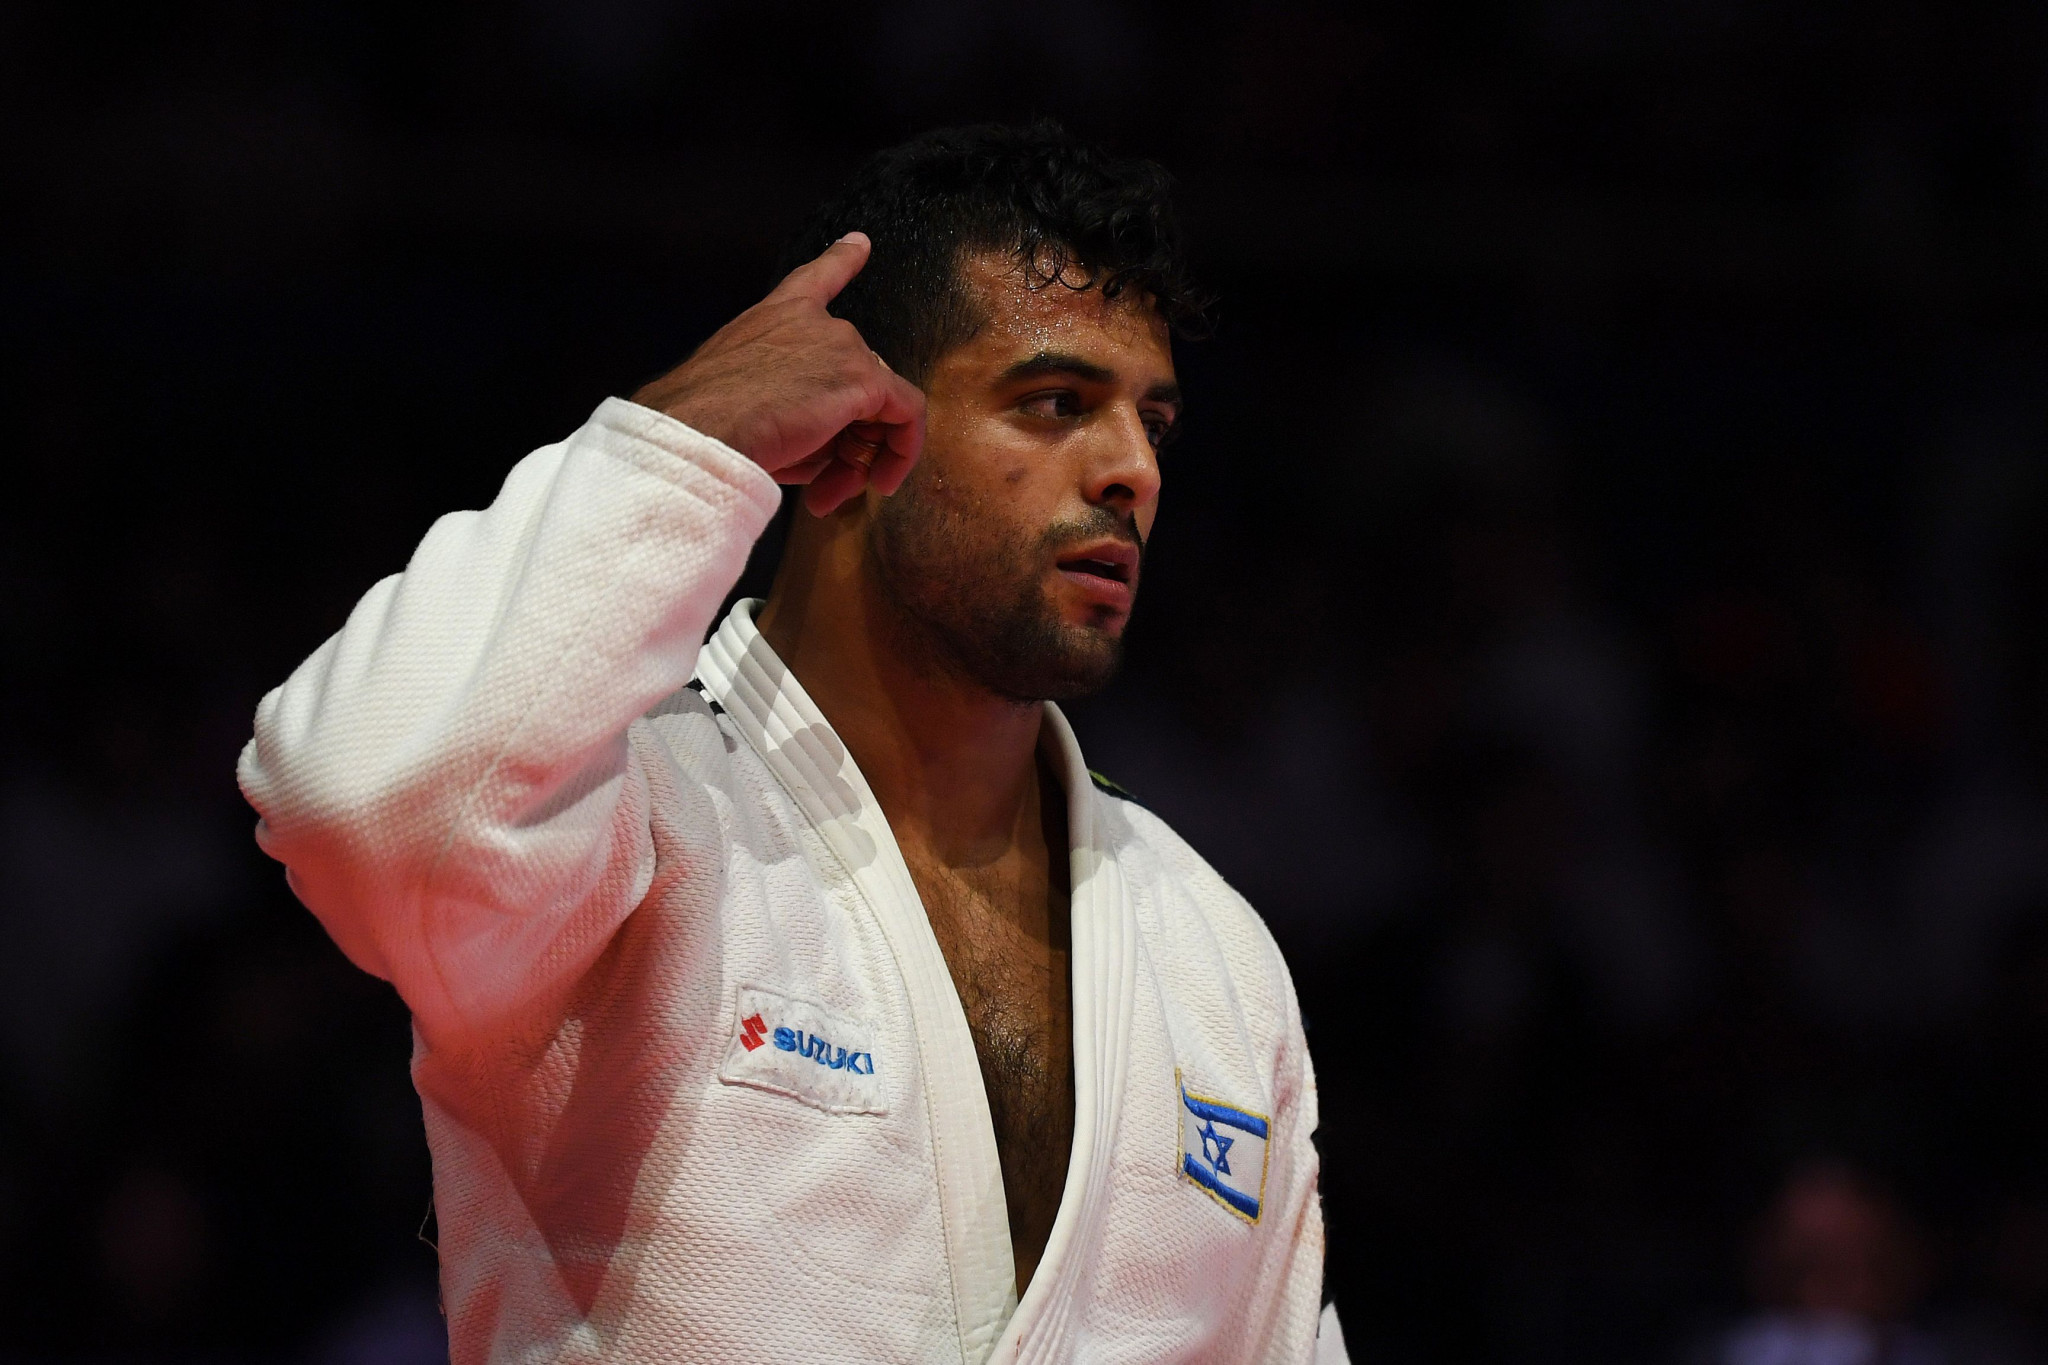 World judo champion Muki auctions off personal items to fund COVID-19 respirators